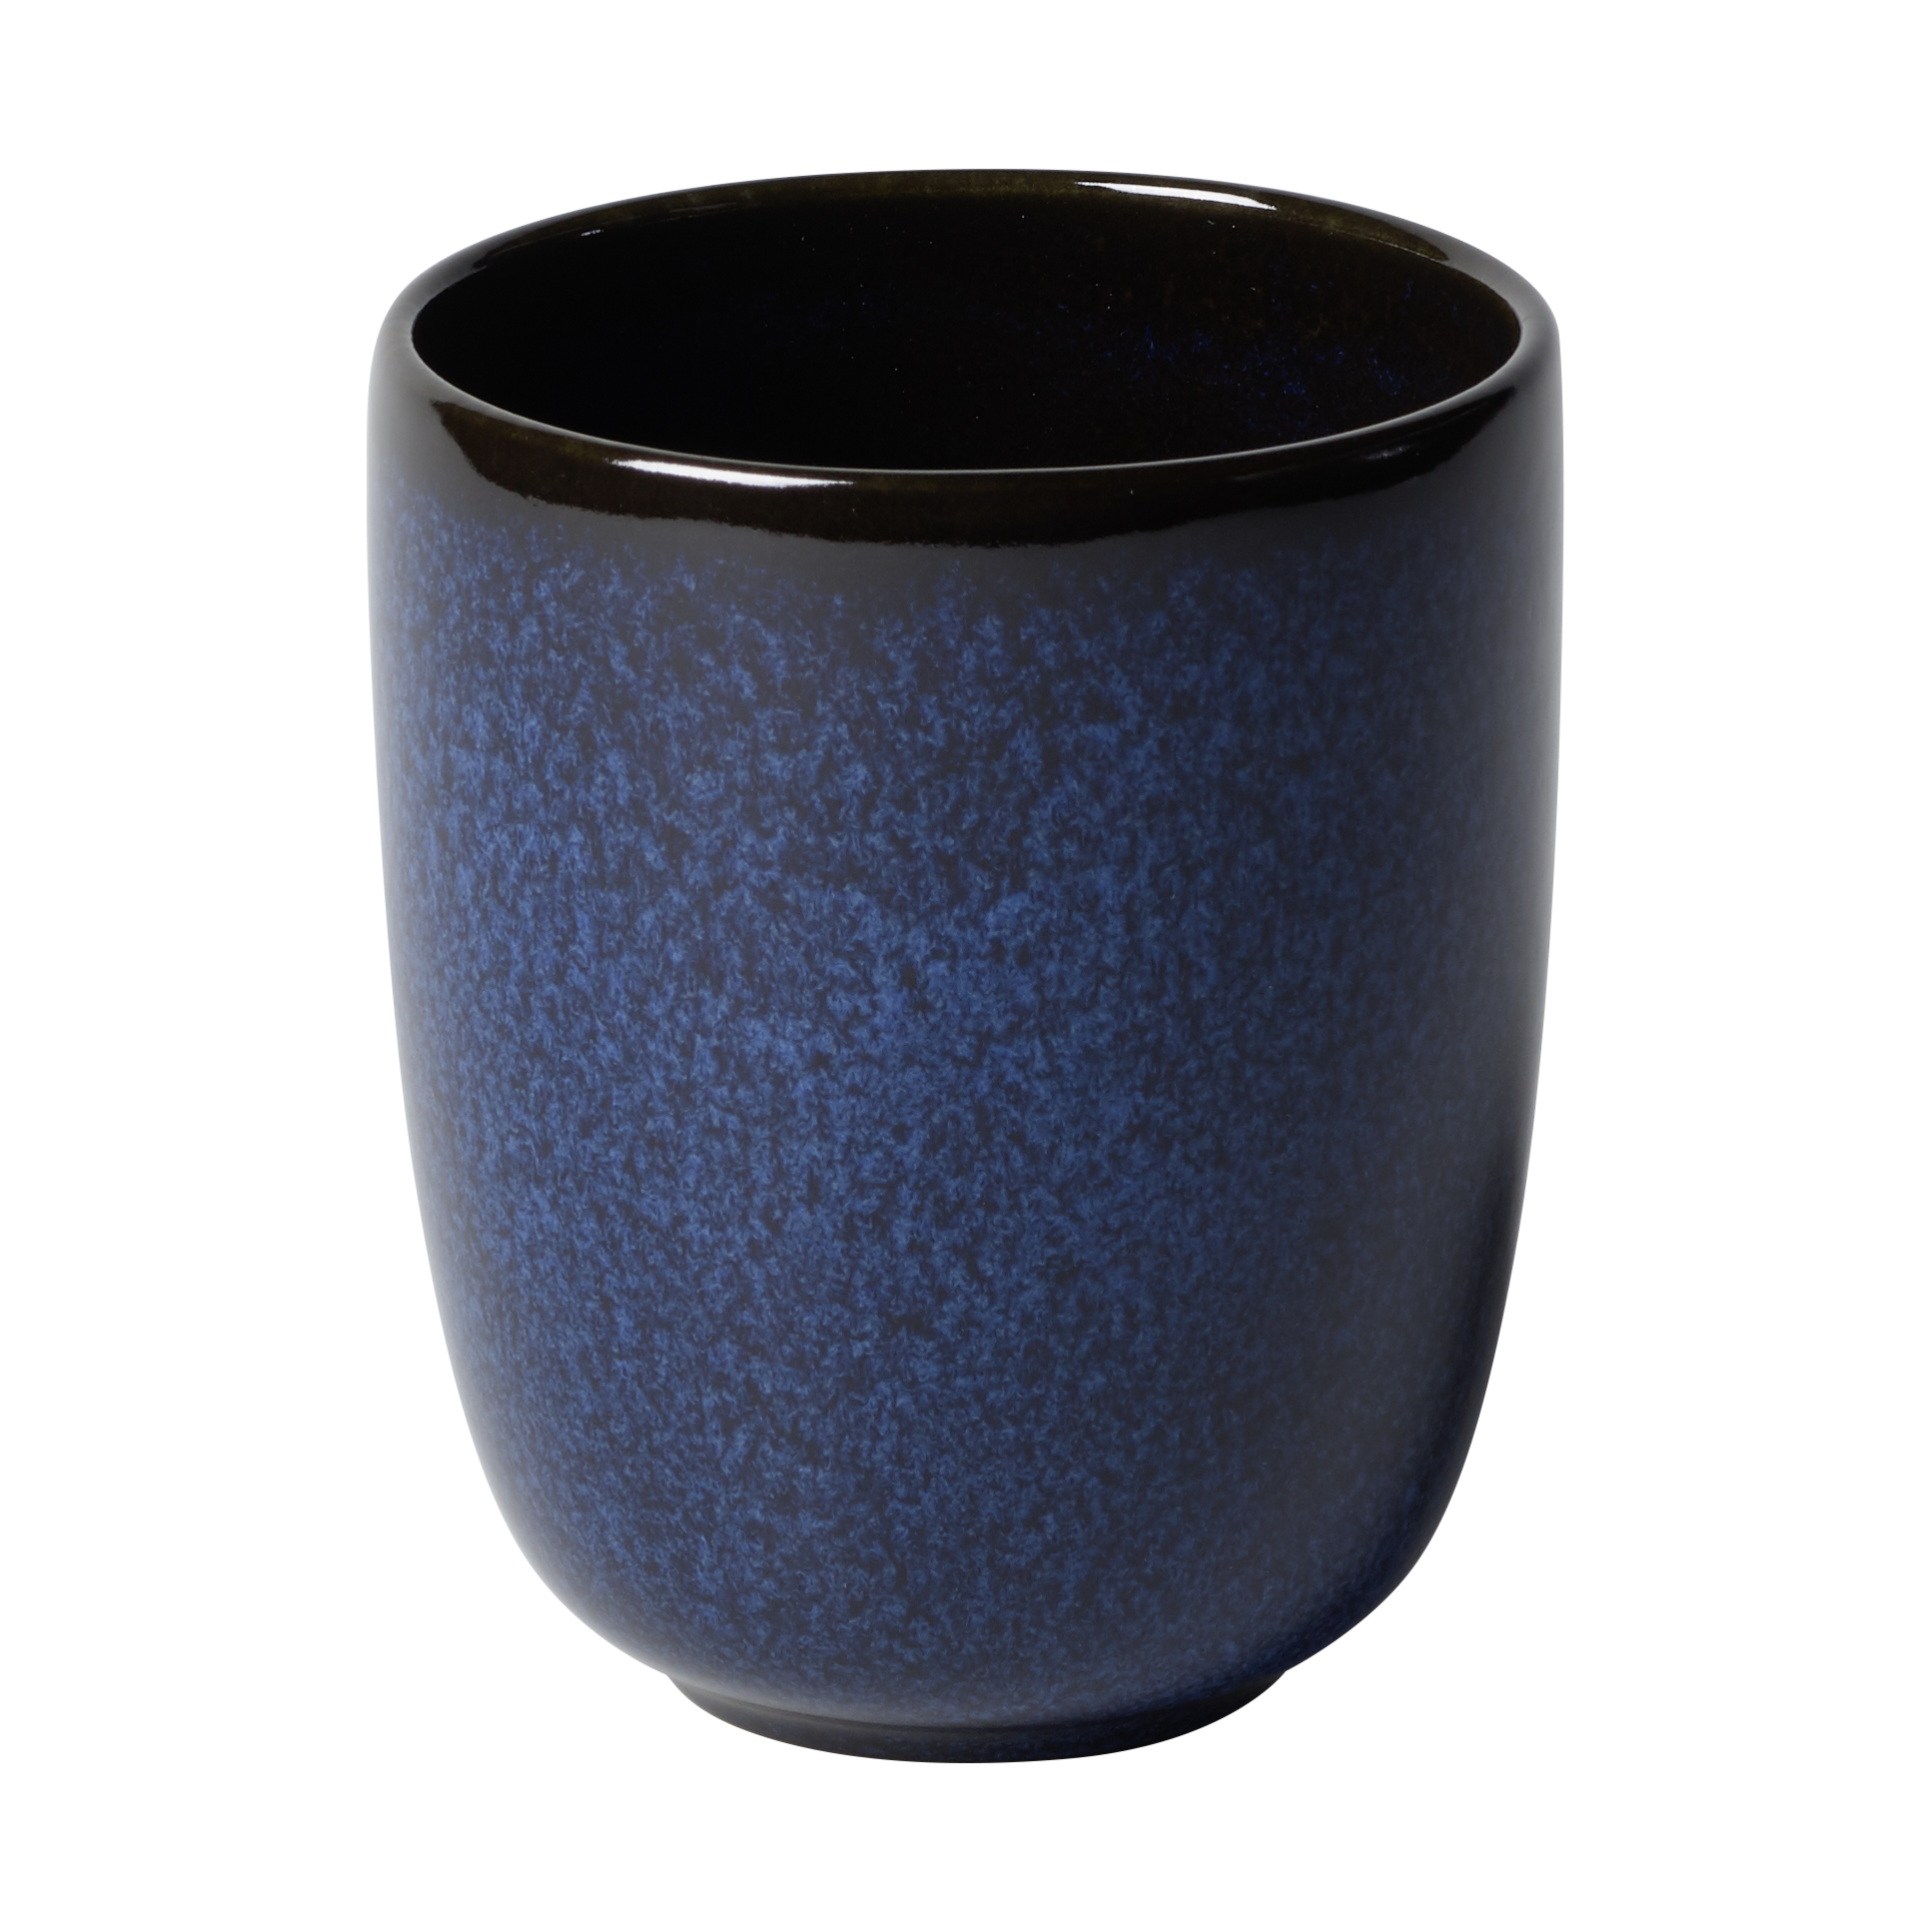 https://www.nordicnest.com/assets/blobs/villeroy-boch-lave-mug-without-handle-40-cl-lave-bleu-blue/40218-02-01-89f472cab2.jpg